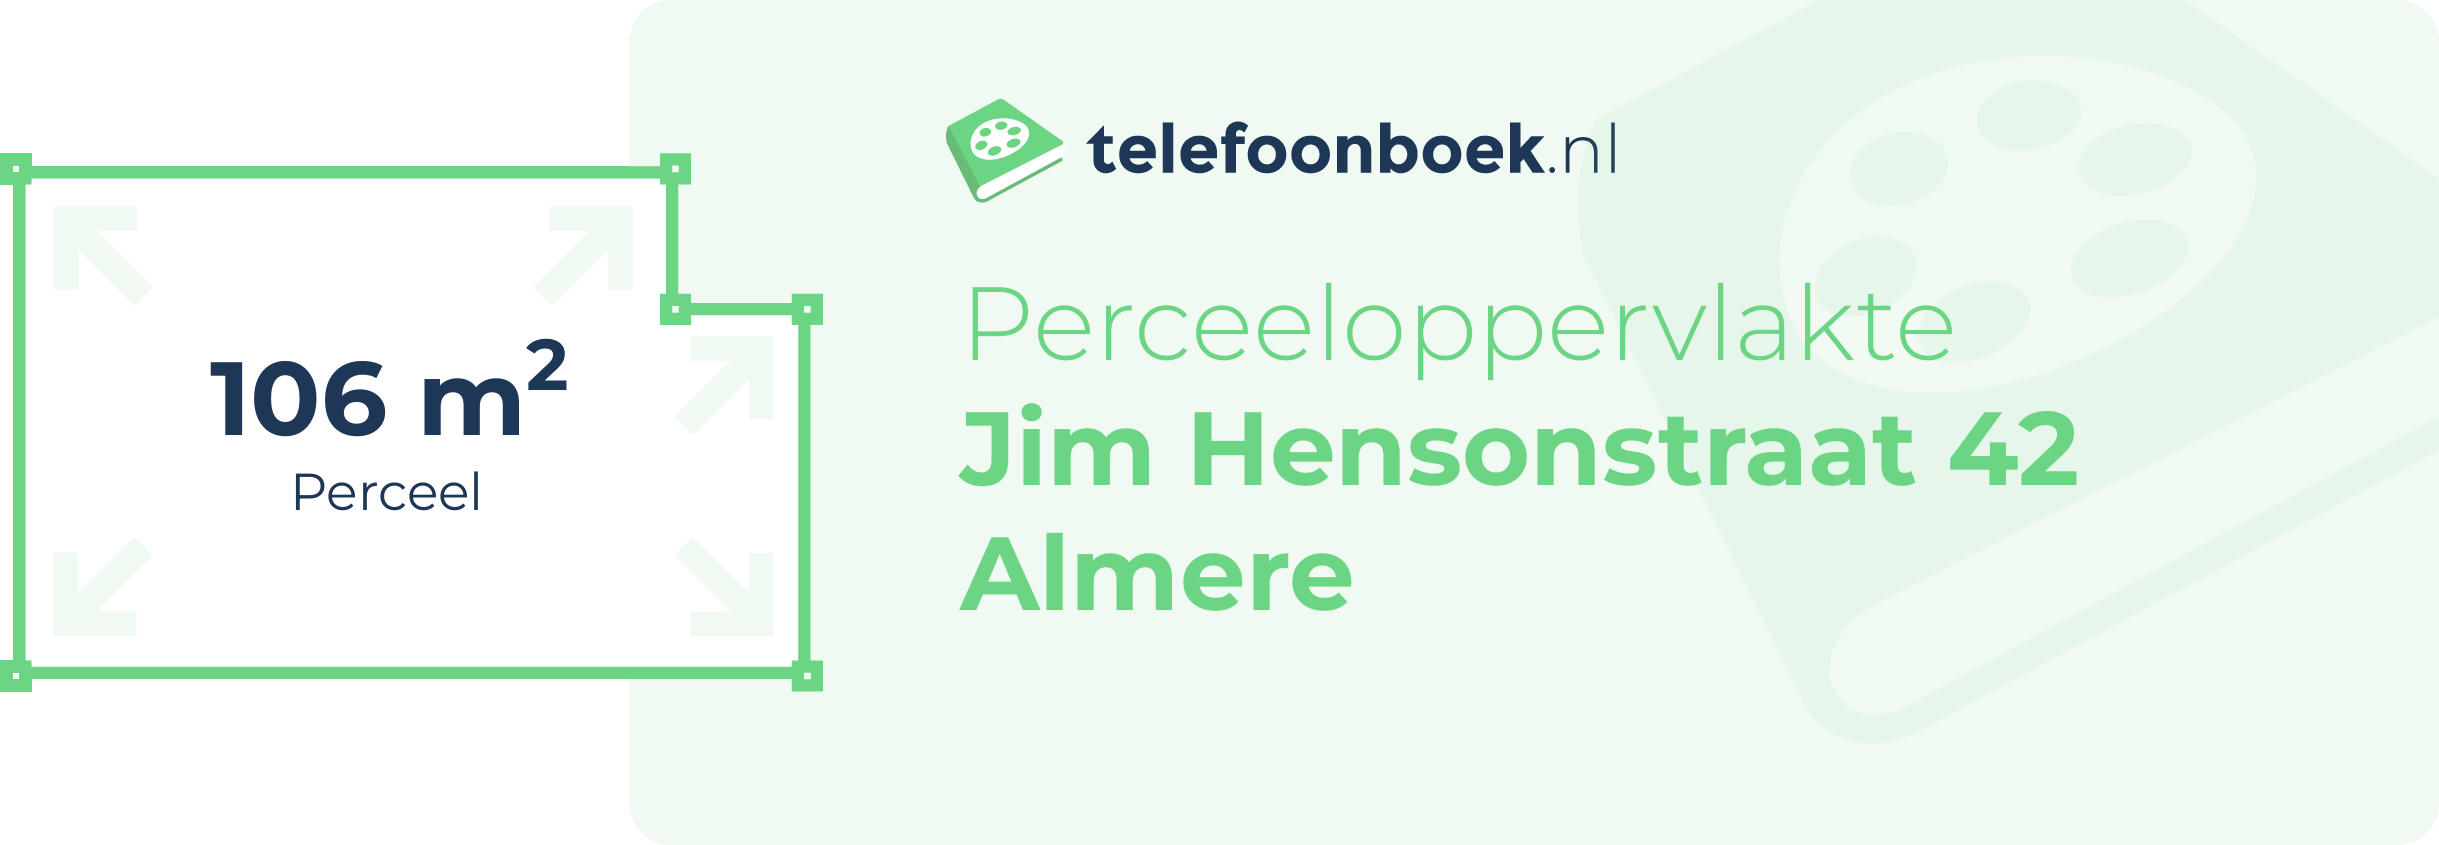 Perceeloppervlakte Jim Hensonstraat 42 Almere